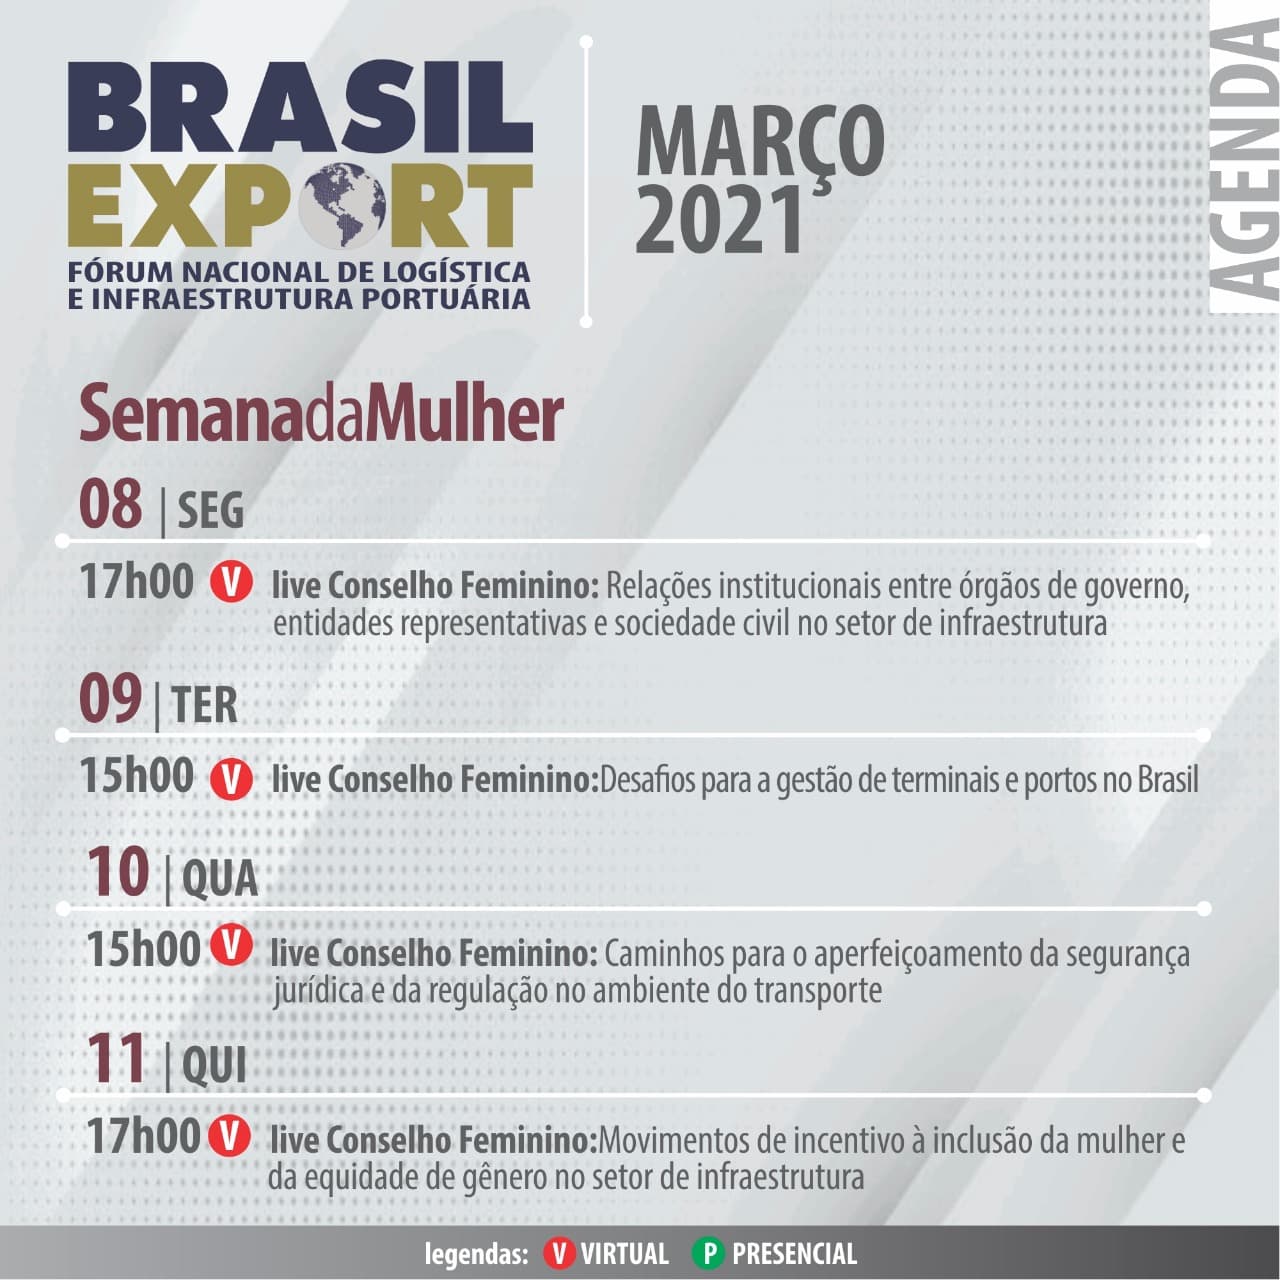  Brasil Export promove Semana da Mulher com lives